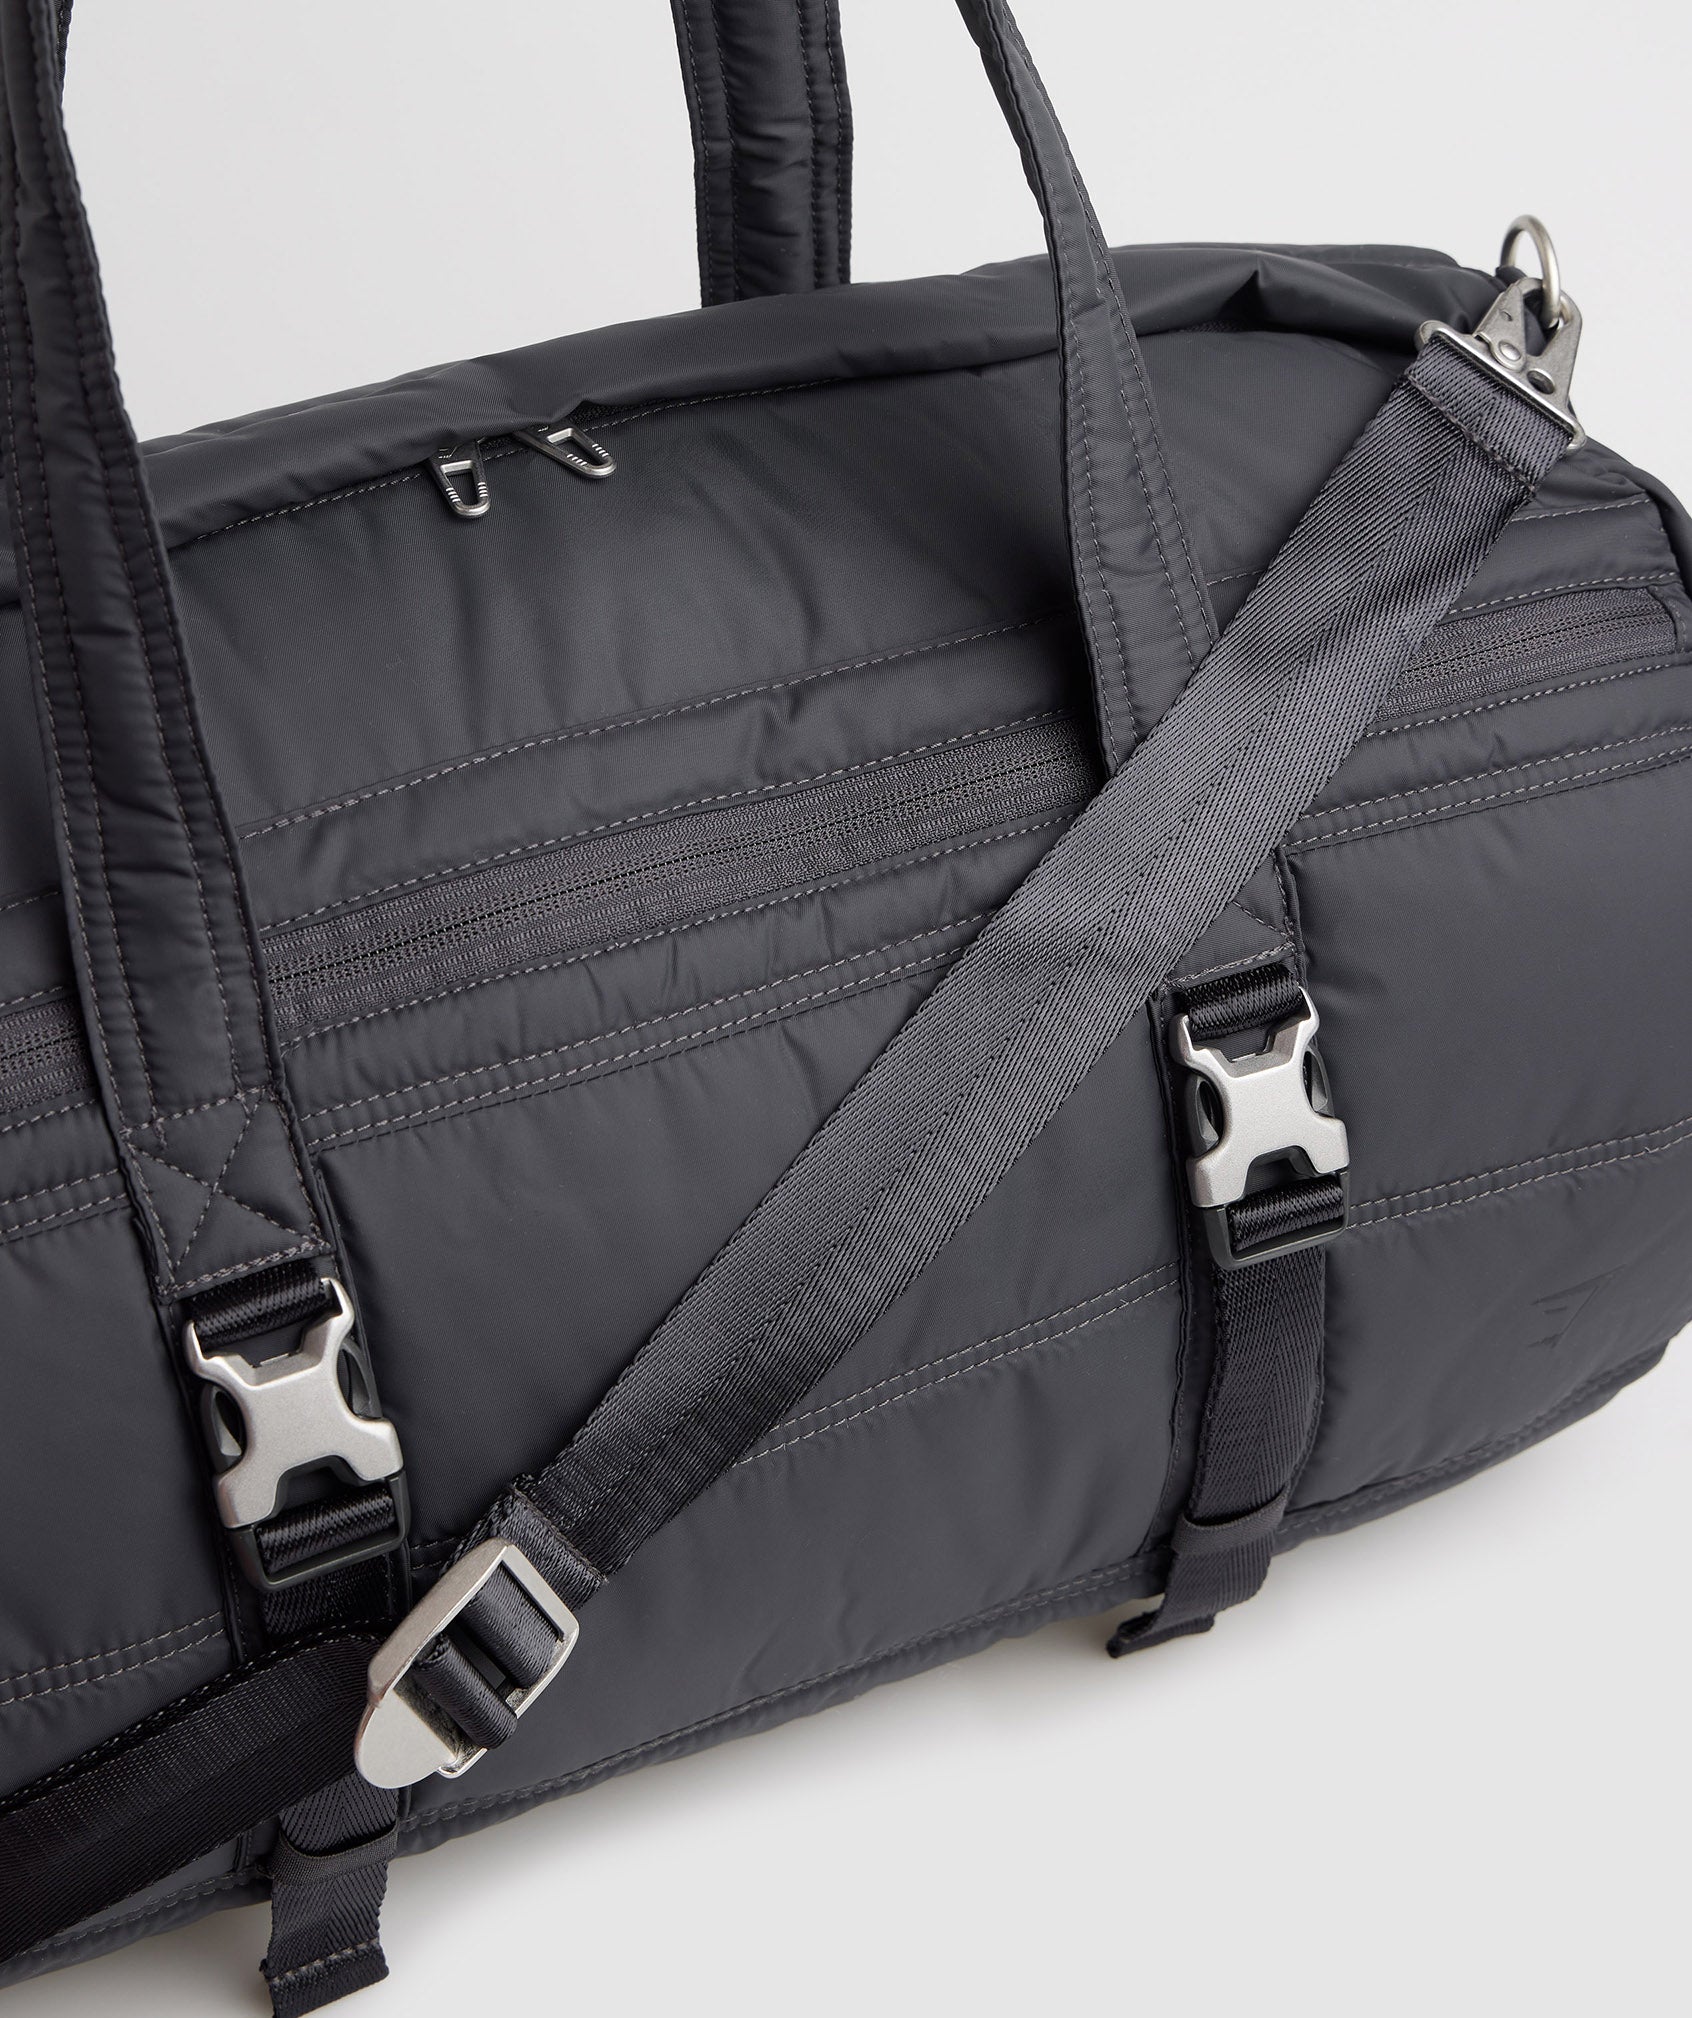 Premium Lifestyle Barrel Bag in Onyx Grey - view 3